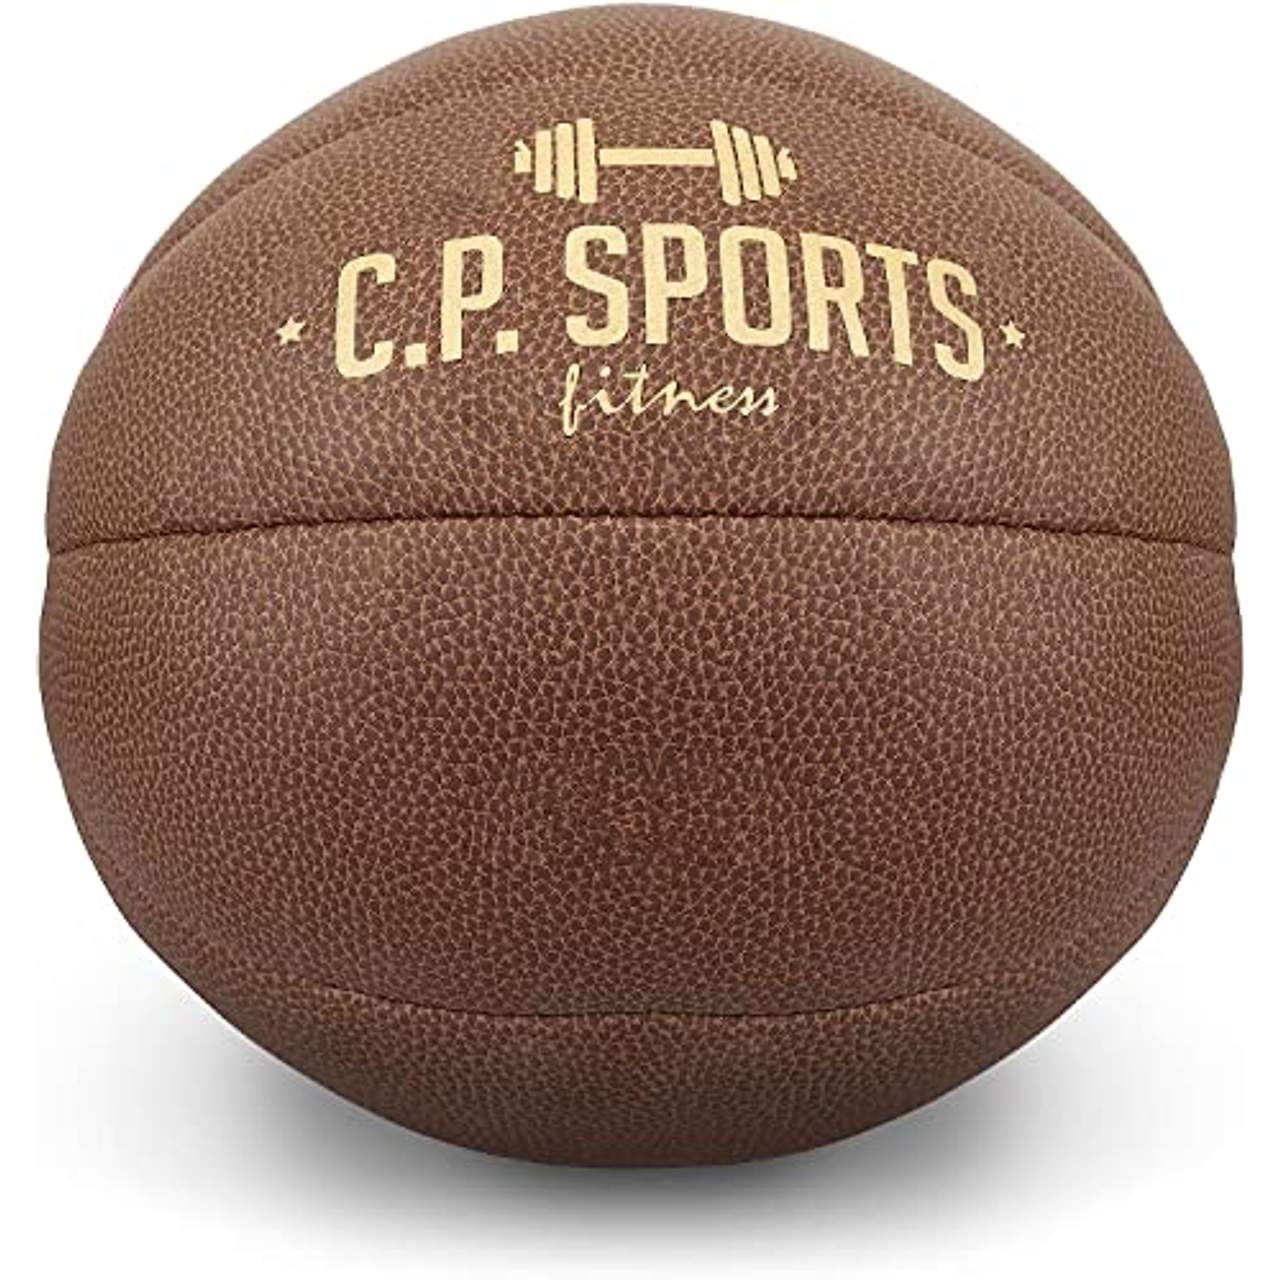 C.P.Sports C.P Sports Medizinball aus hochwertigem Kunstleder